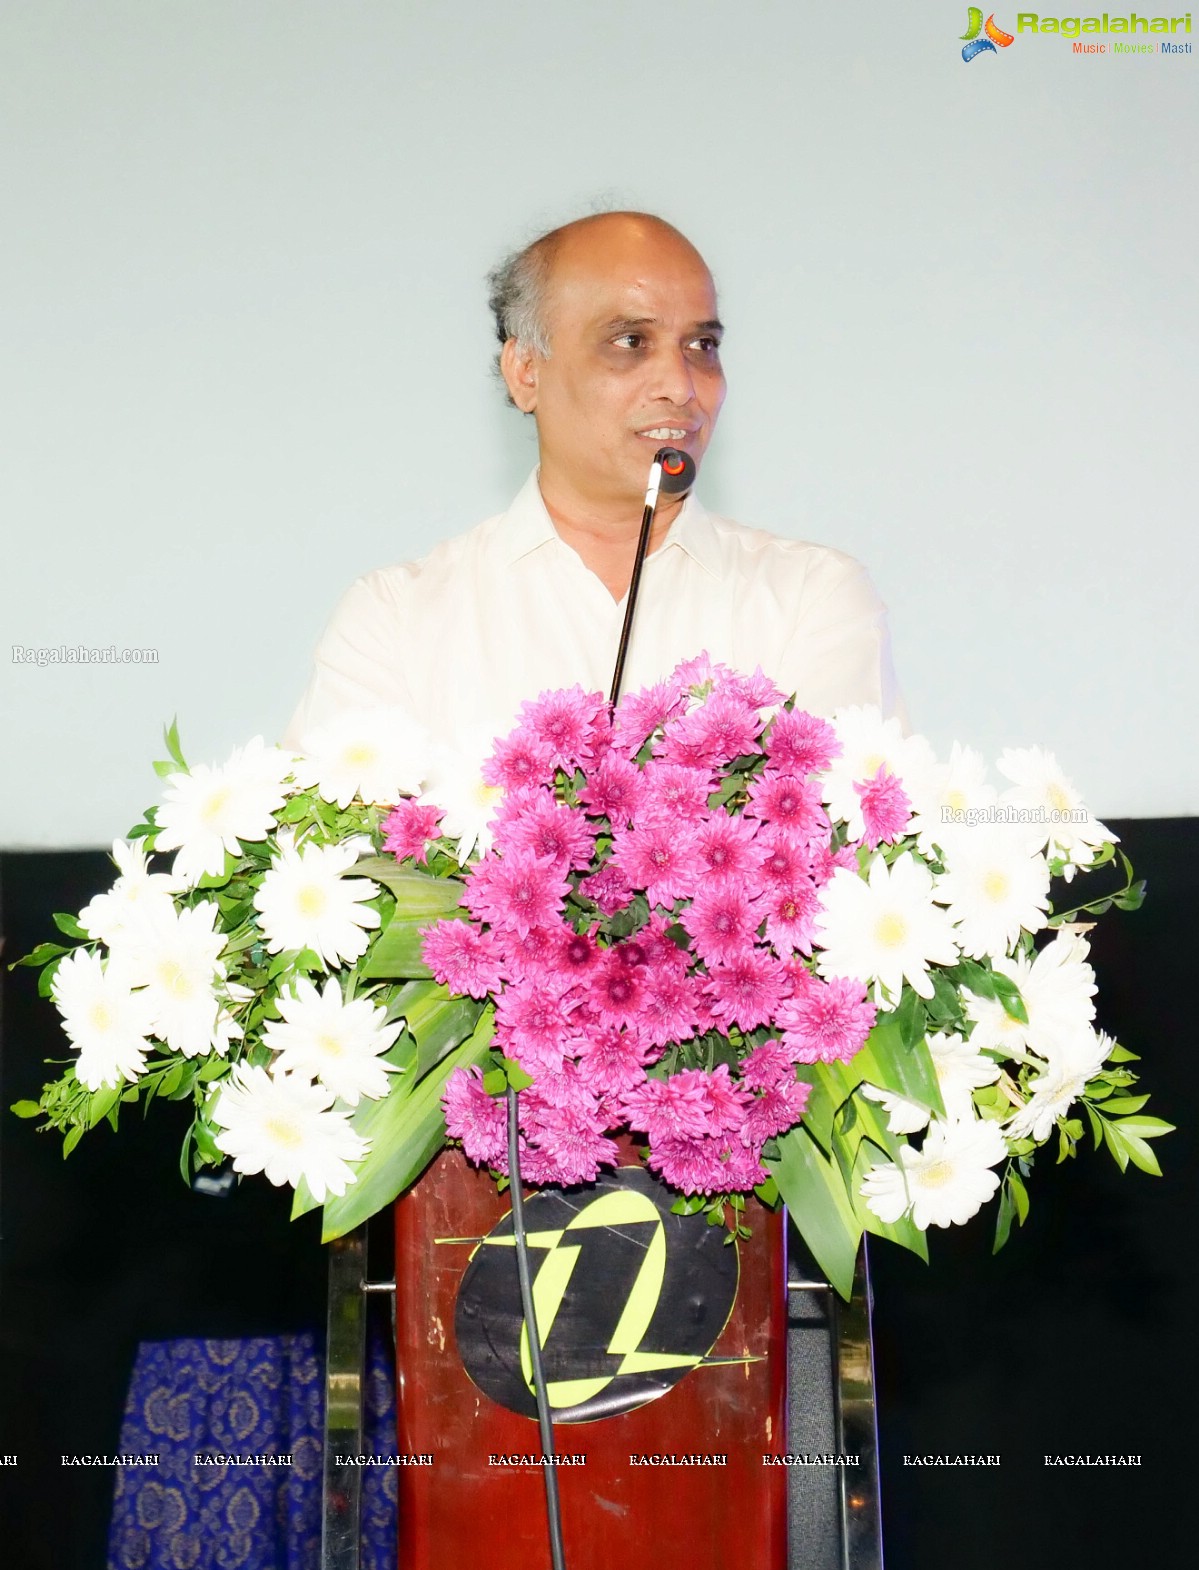 18th Chennai International Film Festival Draws to a Close